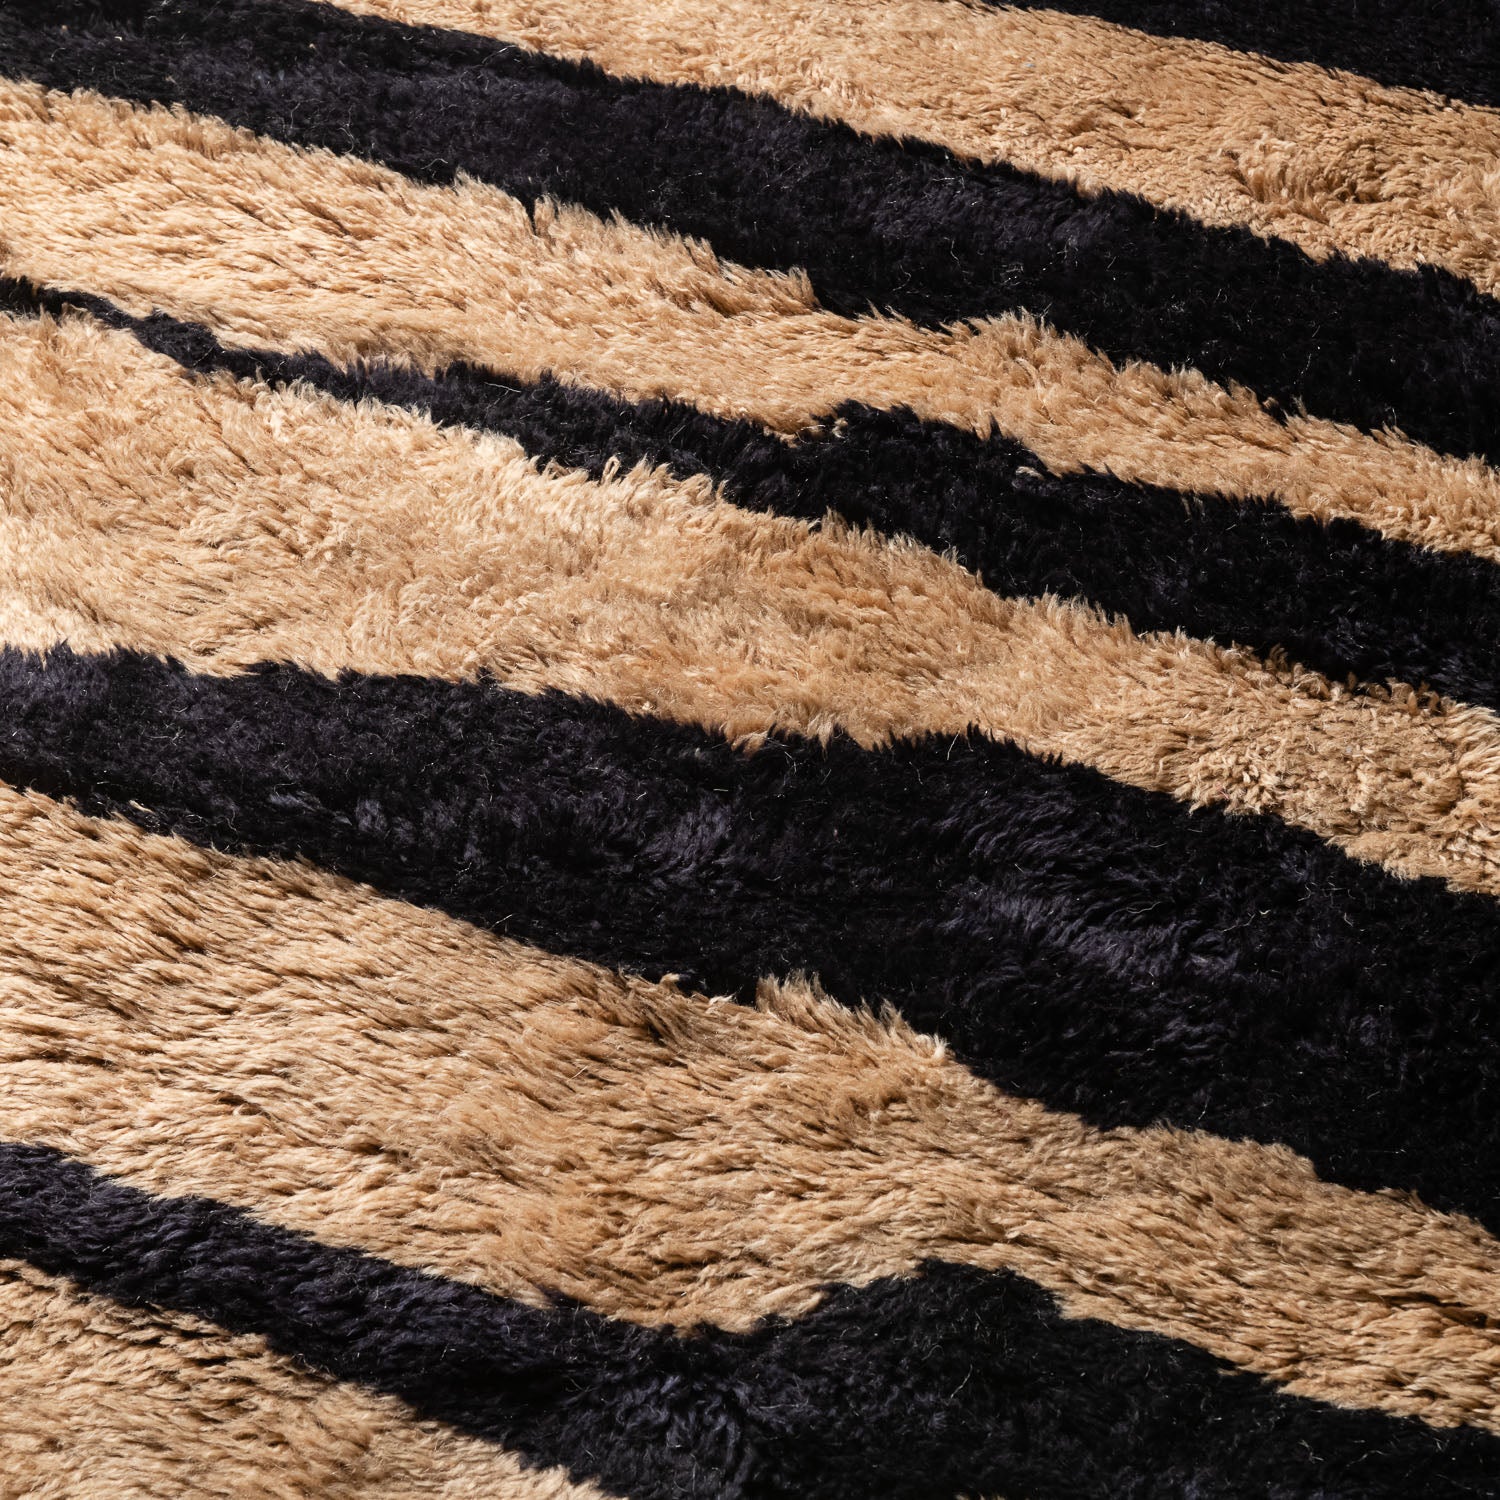 Wild Stripes - Premium shag Moroccan rug